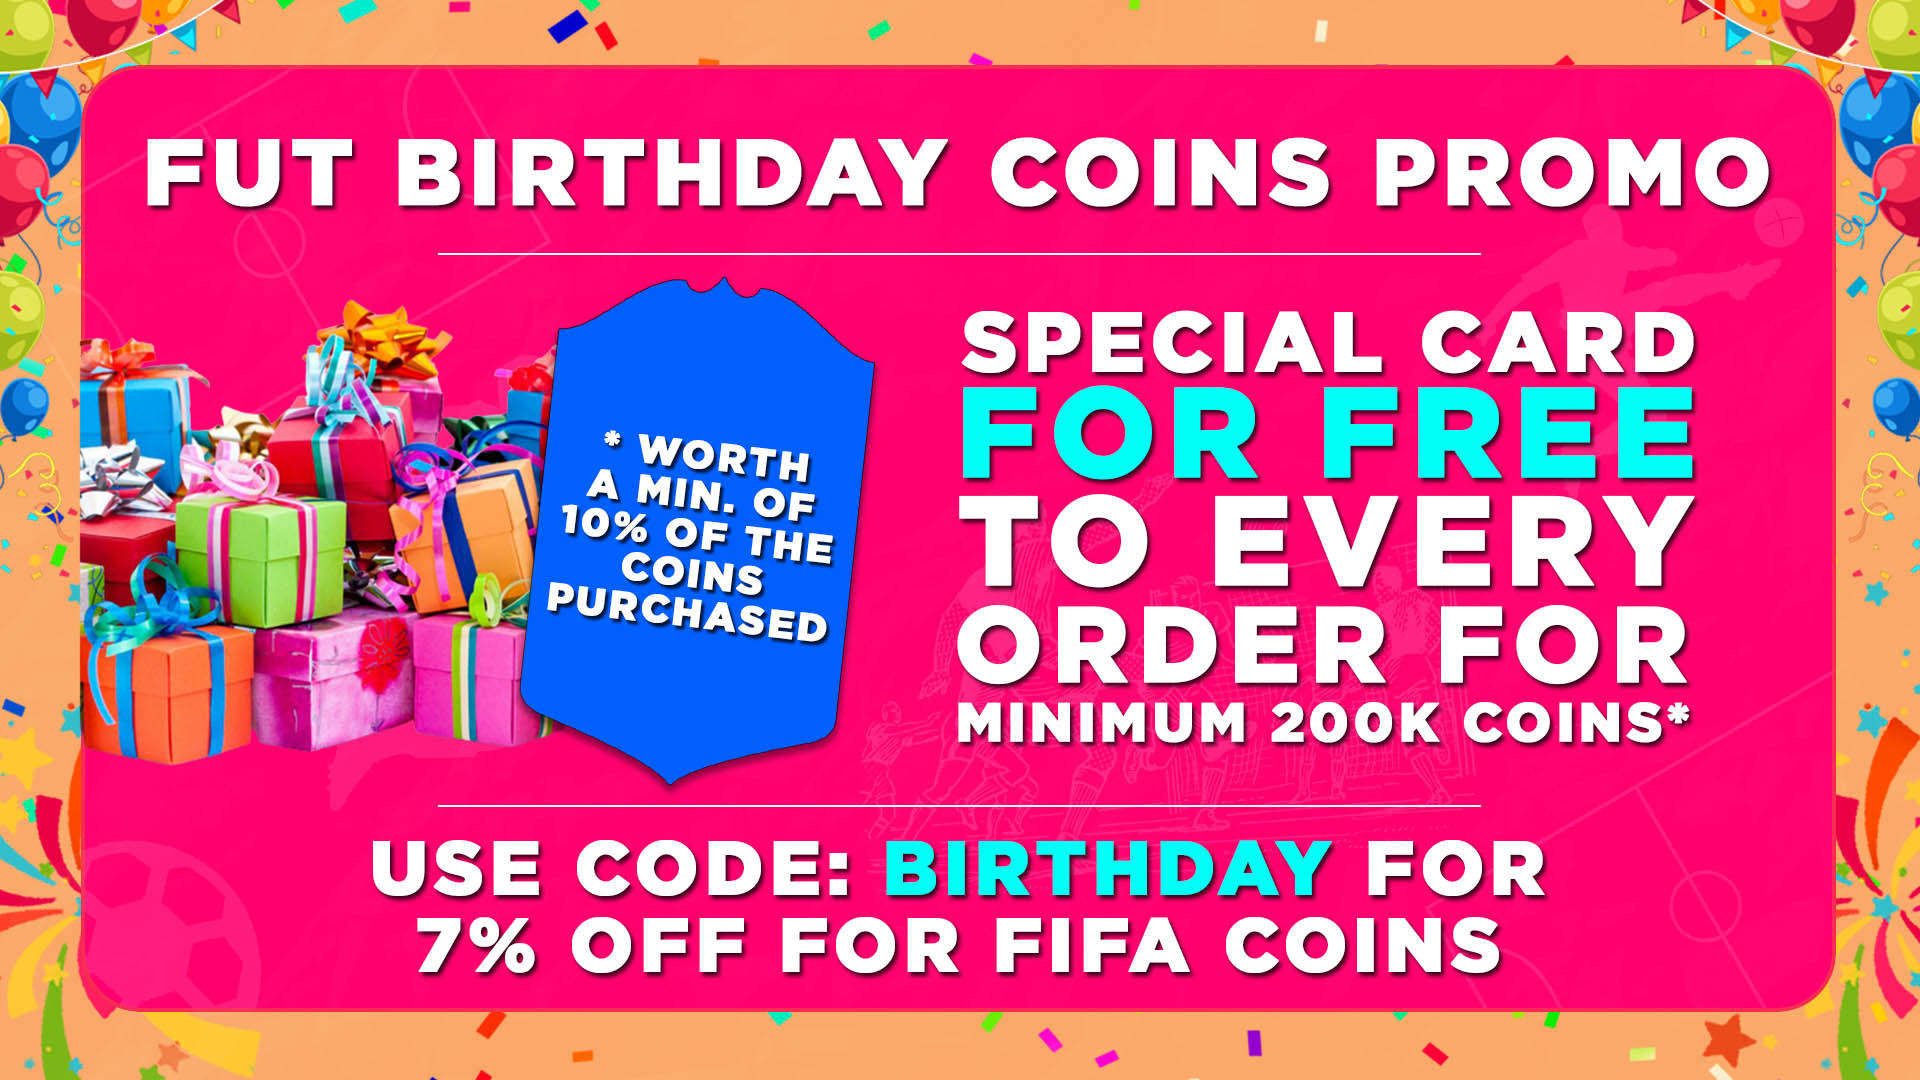 FIFA Coins Promo: FUT Birthday